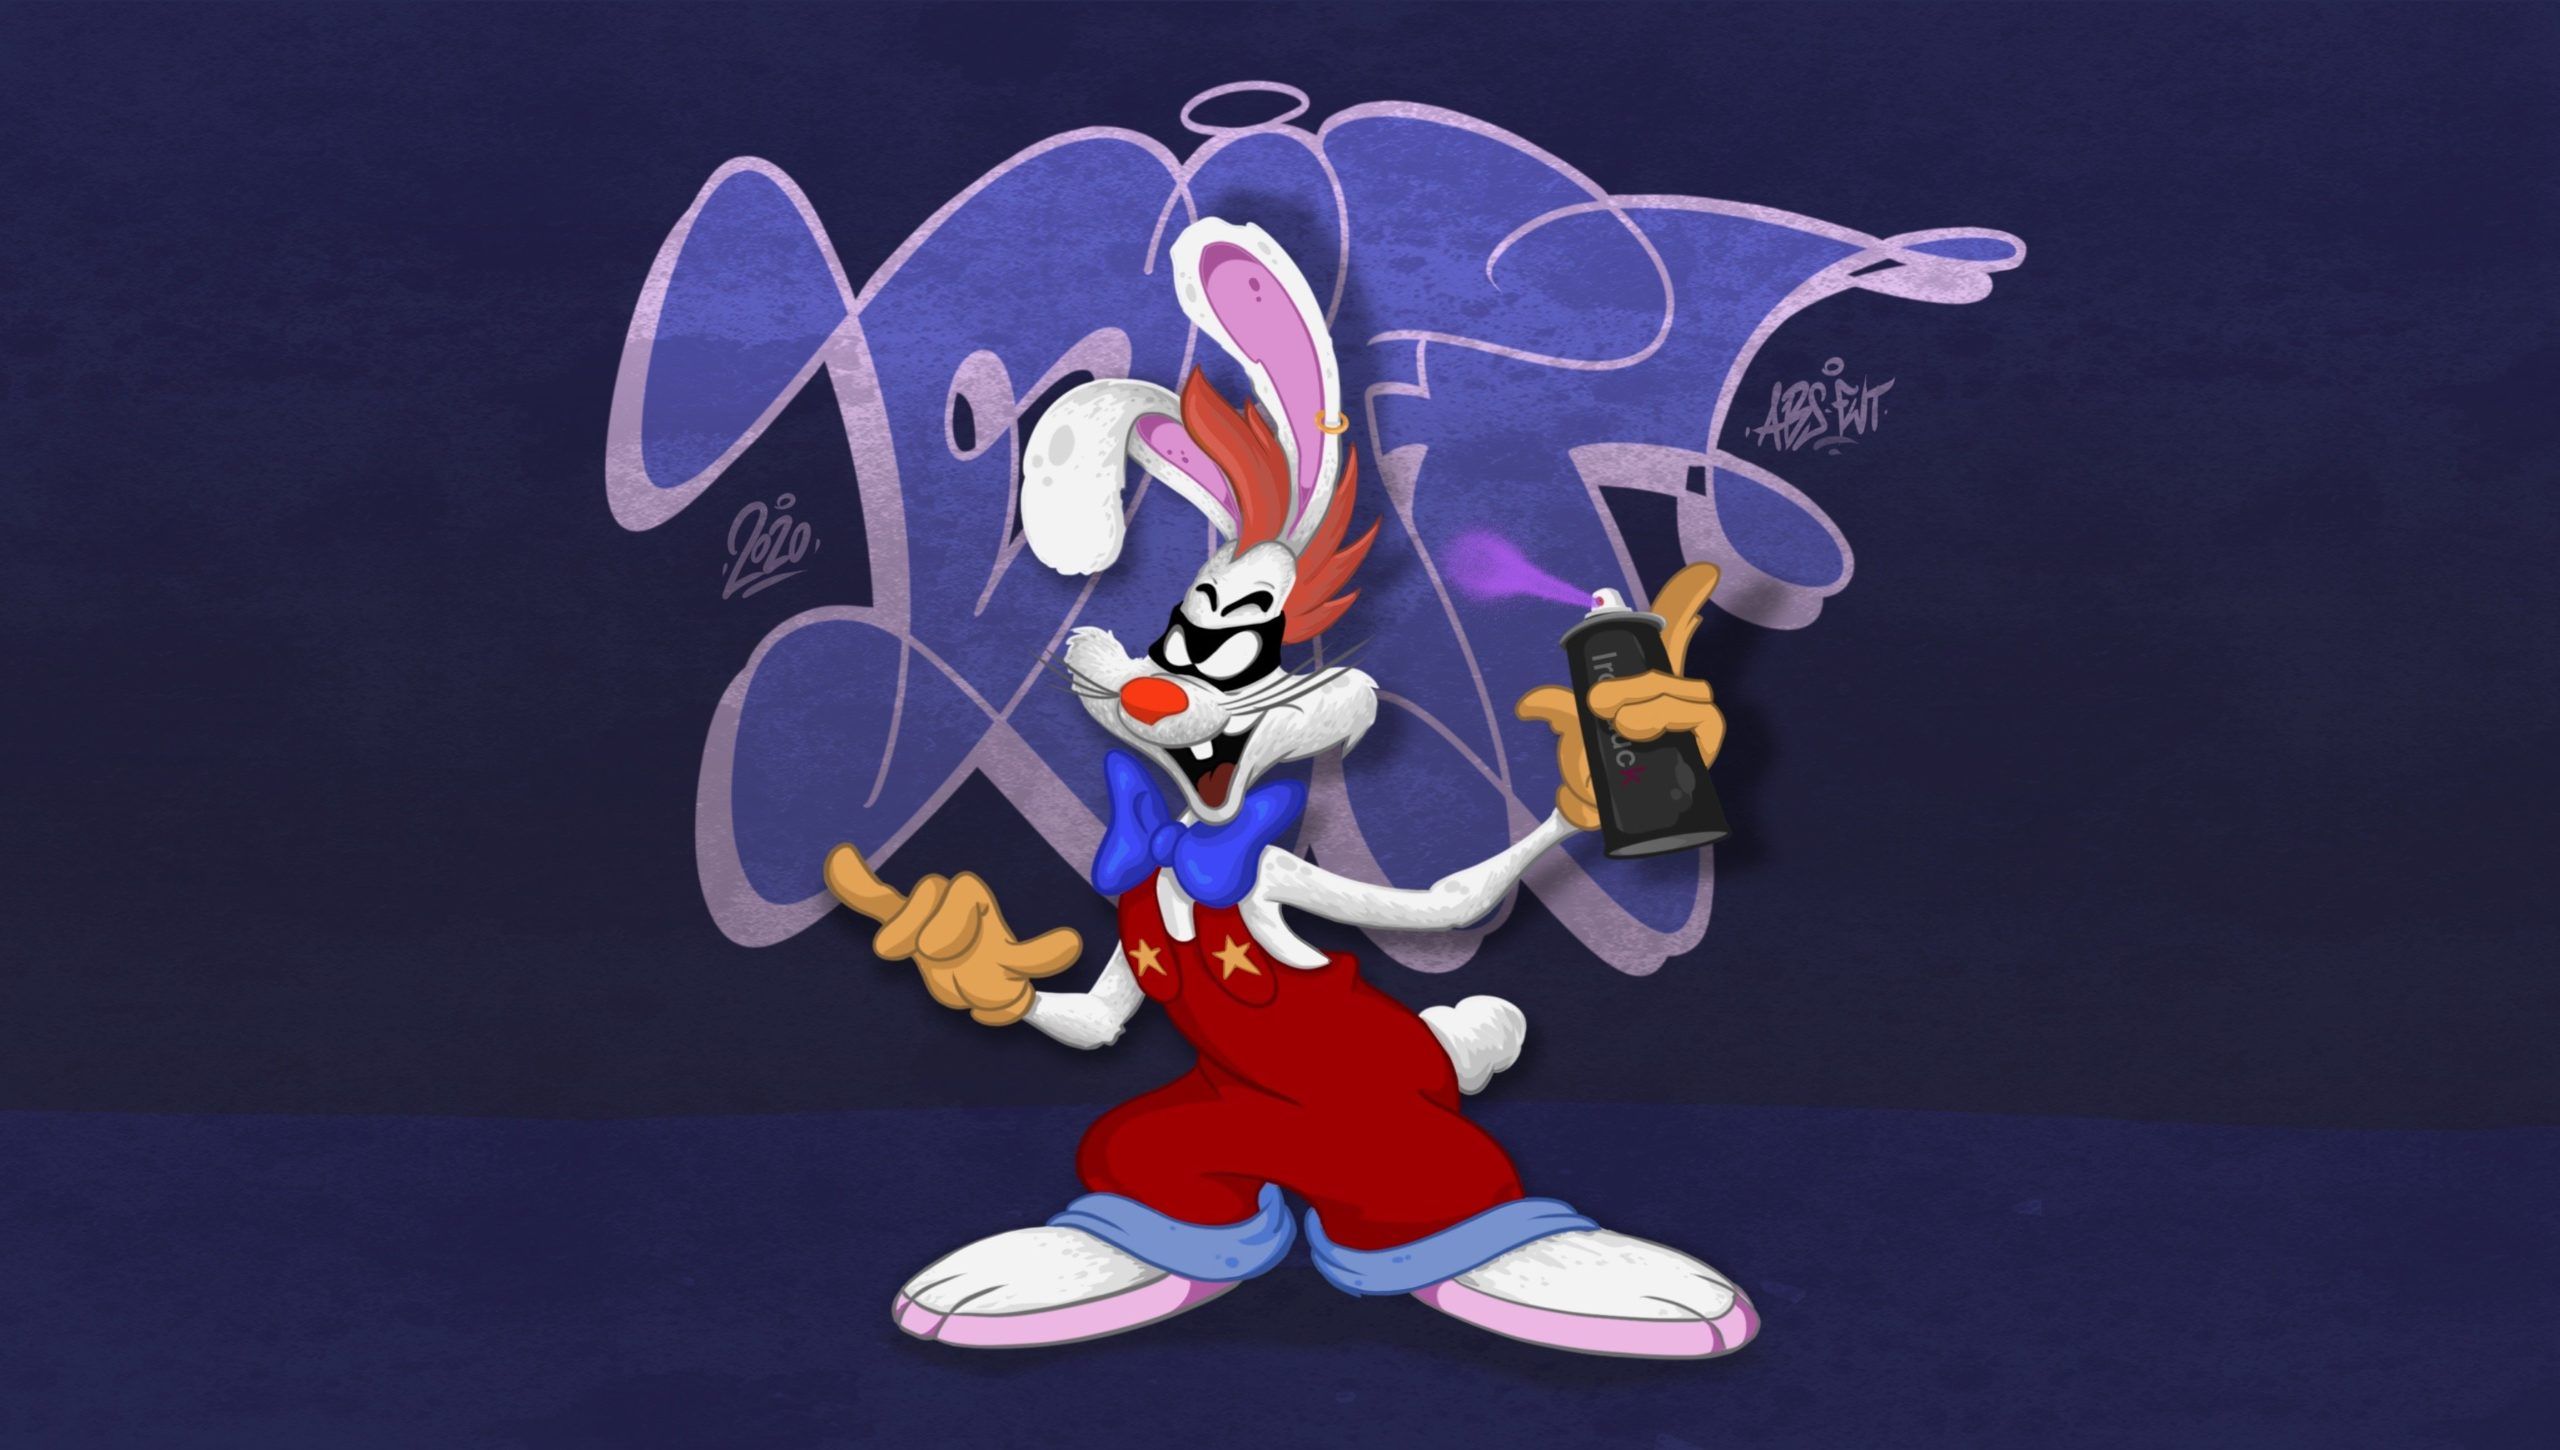 Roger Rabbit wallpaper - 1080p download free - 1920×1080 - Bugs Bunny